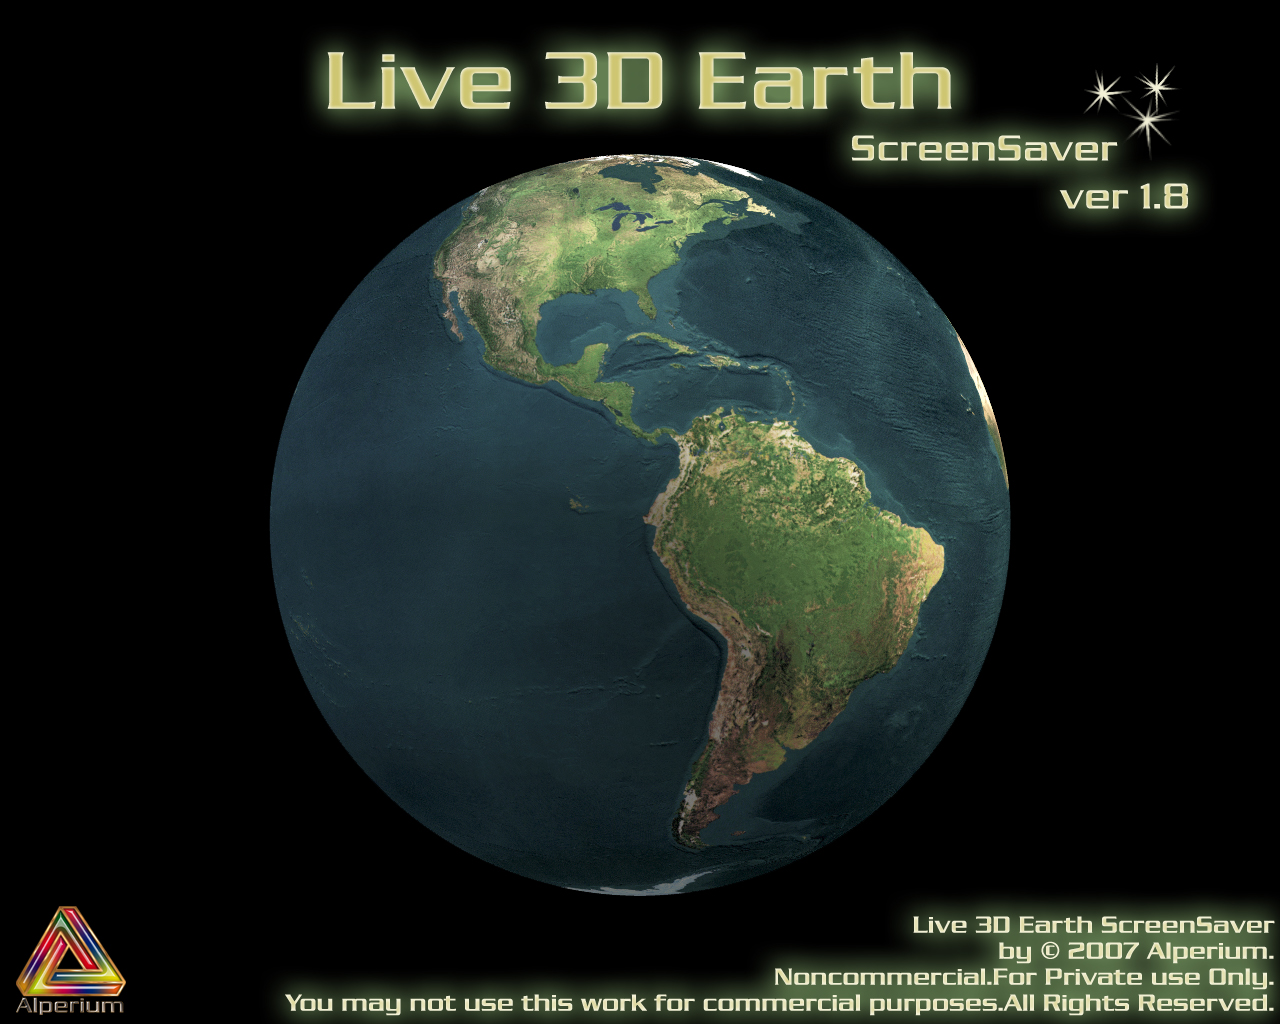 WinCustomize Explore Screensavers Live 3D Earth 18 ScreenSaver 1280x1024